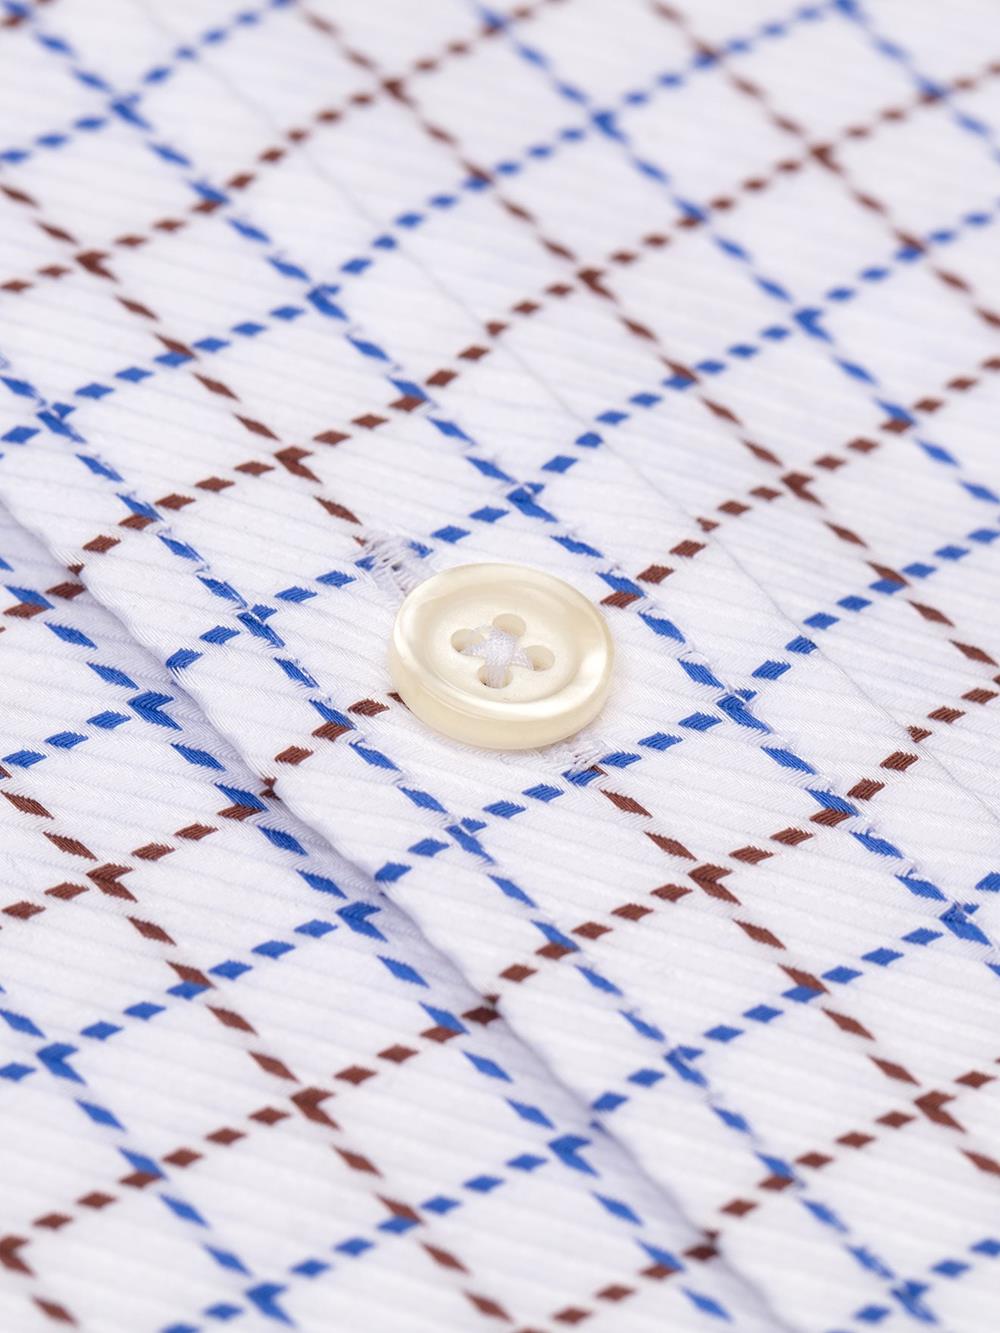 Sean brown and blue checked shirt - Button-down collar